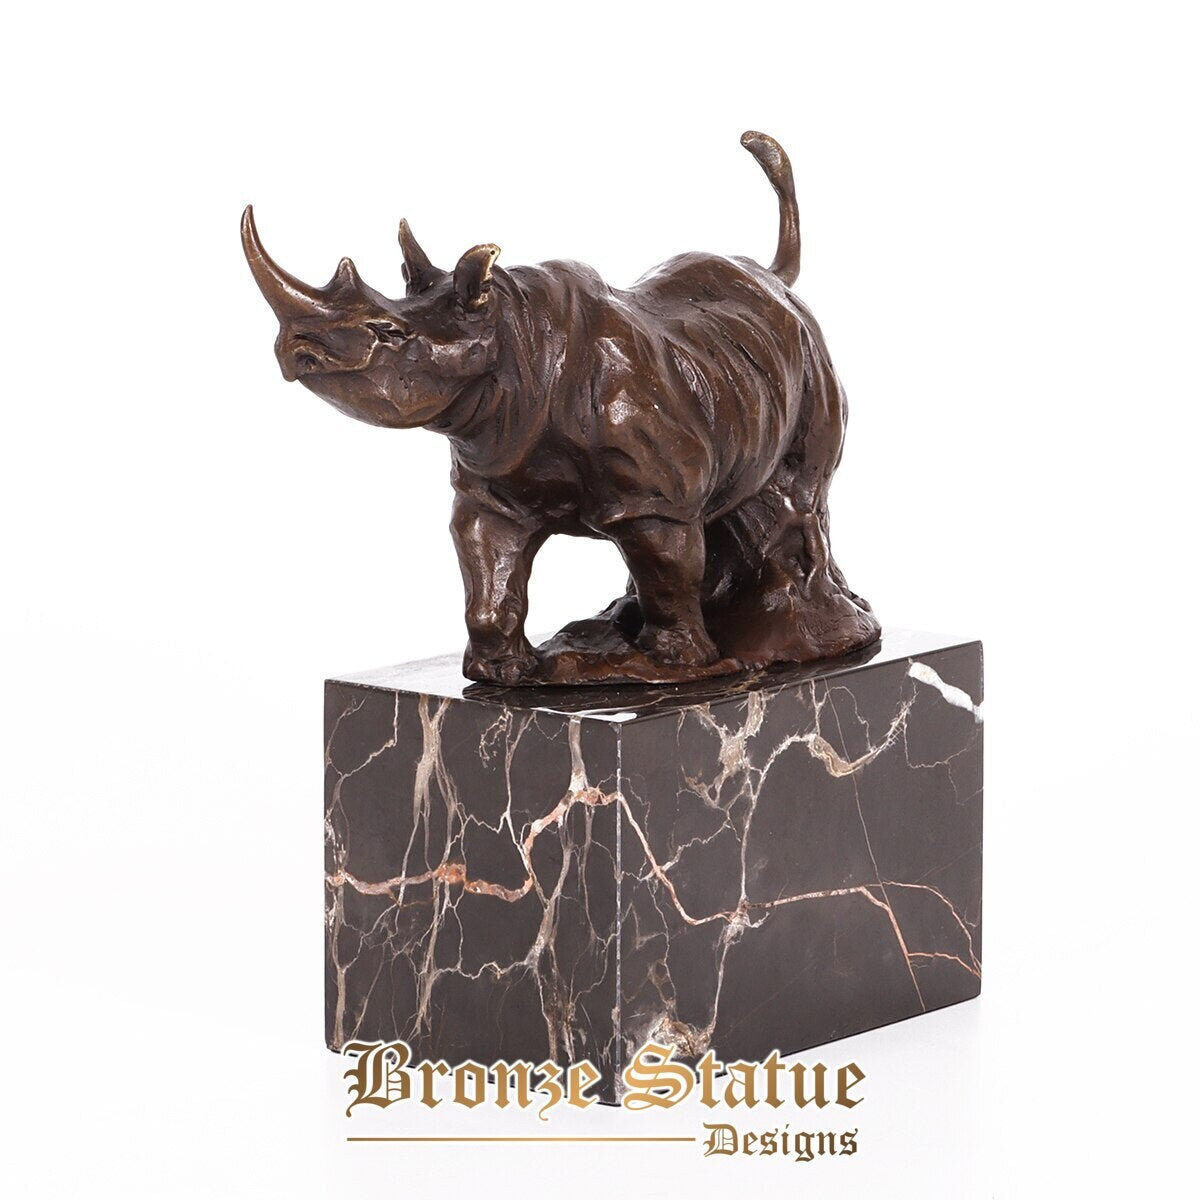 Bronze rhinoceros statue figurine hot cast wildlife animal sculpture art indoor home decor gorgeous gift